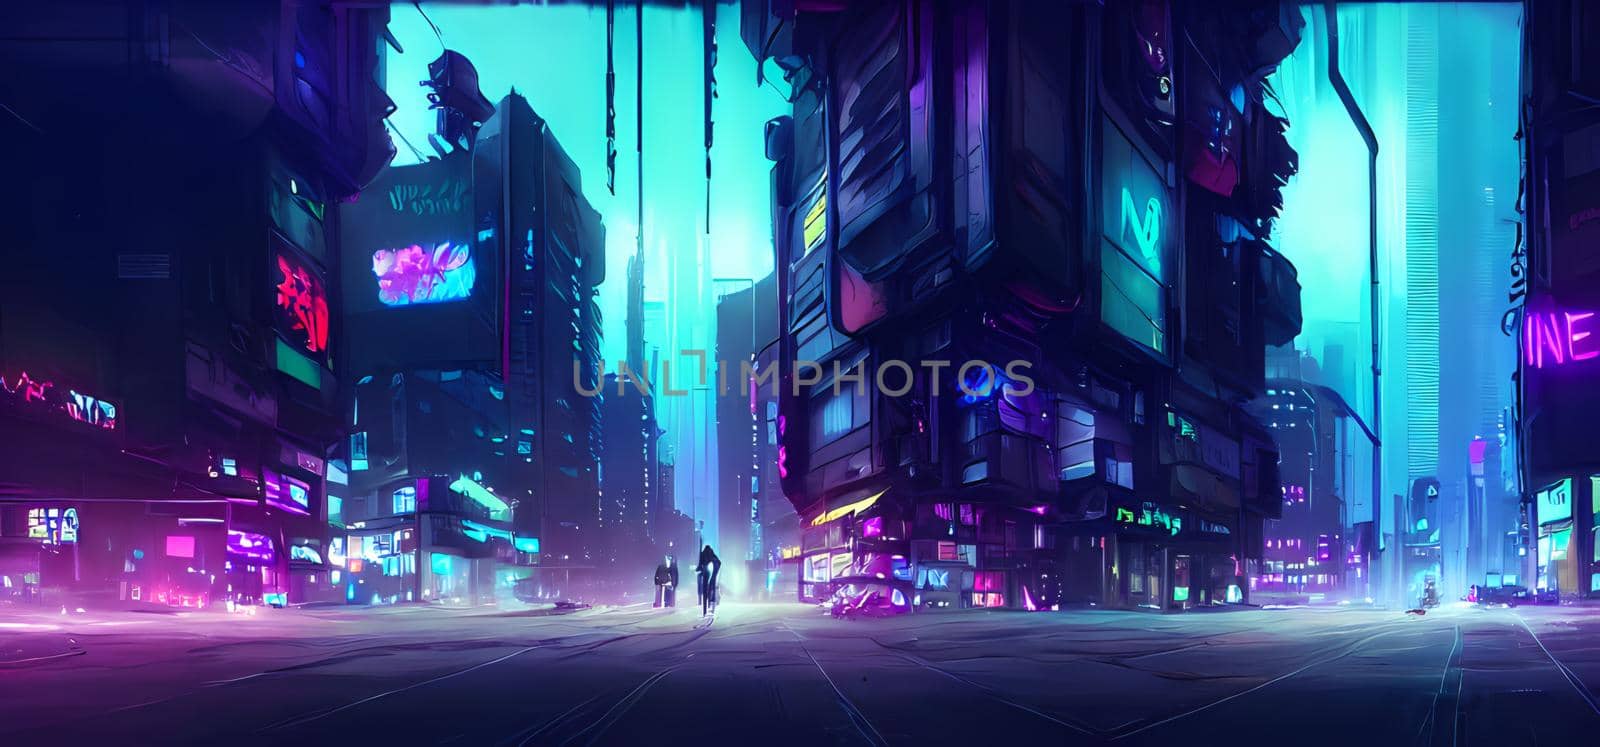 Cyberpunk neon city night. Futuristic city scene in a style of cyberpunk art.Retro future illustration. Urban scene. Digital art painting for book illustration,background wallpaper, concept art. by yay_lmrb